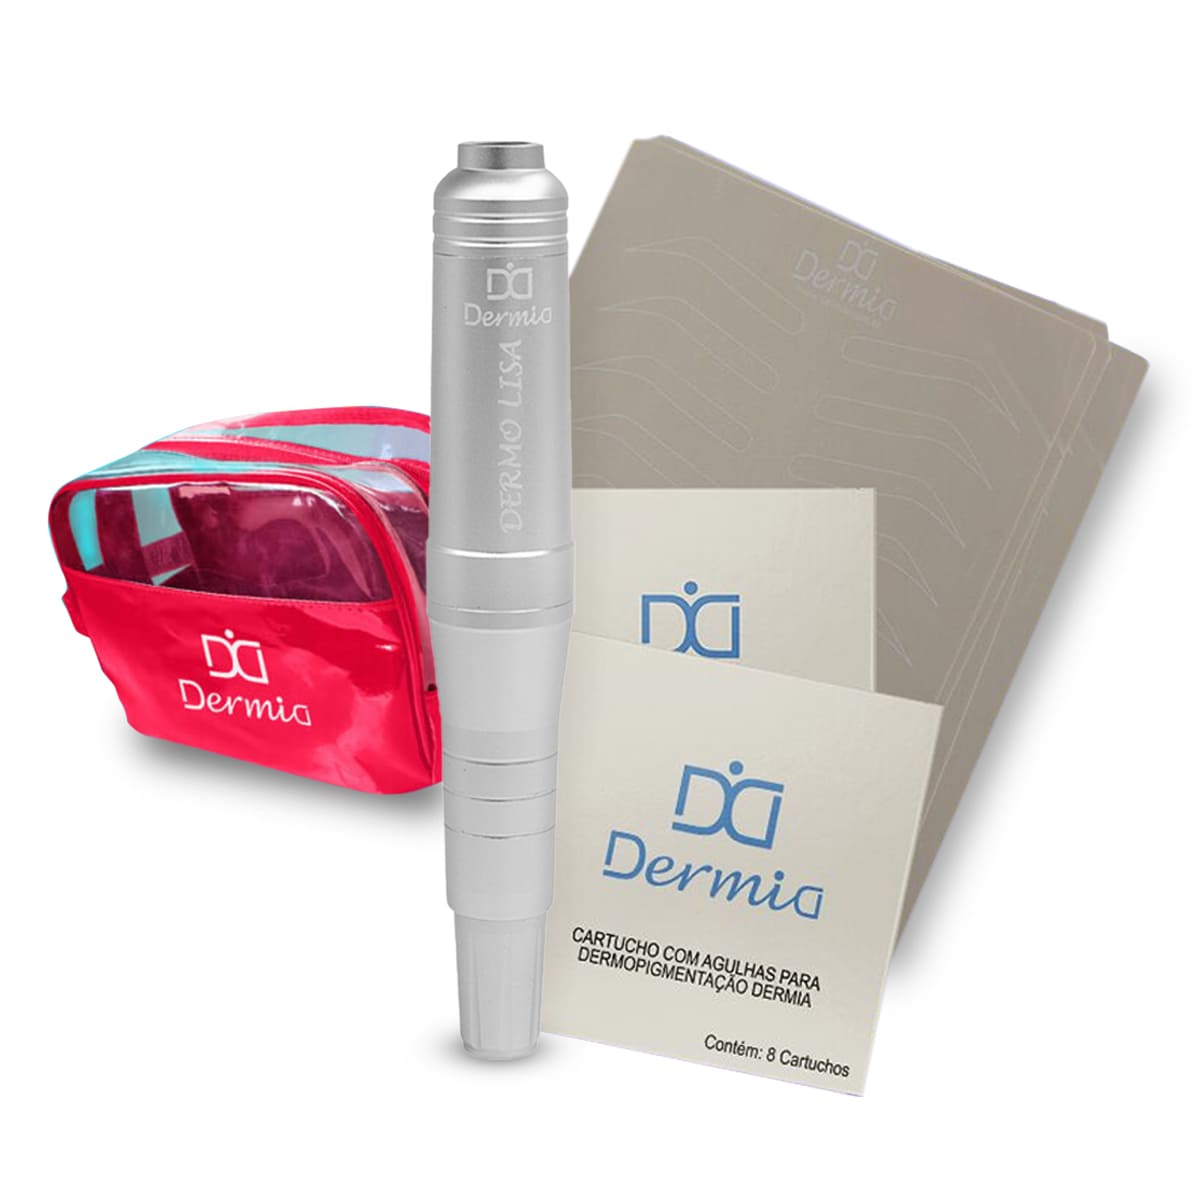 Dermografo Dermo Lisa Dermia + Controle Digital Para Micropigmentacao